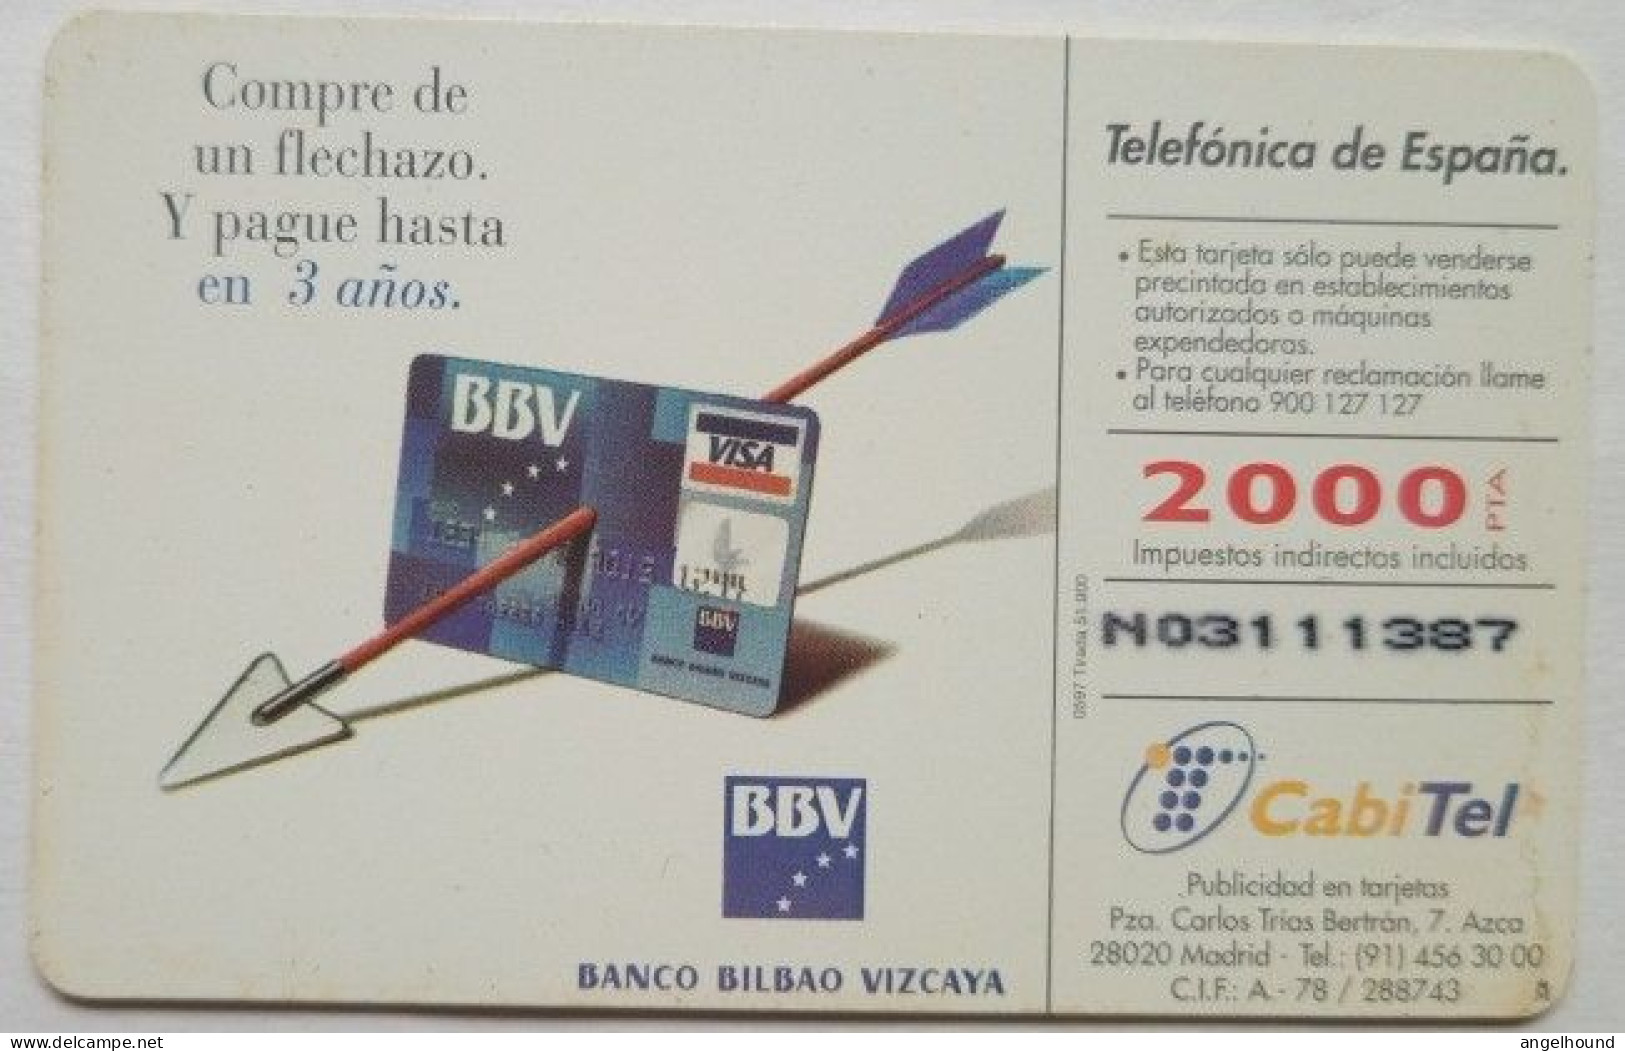 Spain 2000 Pta. Chip Card - Moneda Andalusi En La Alhambra - Emissioni Di Base